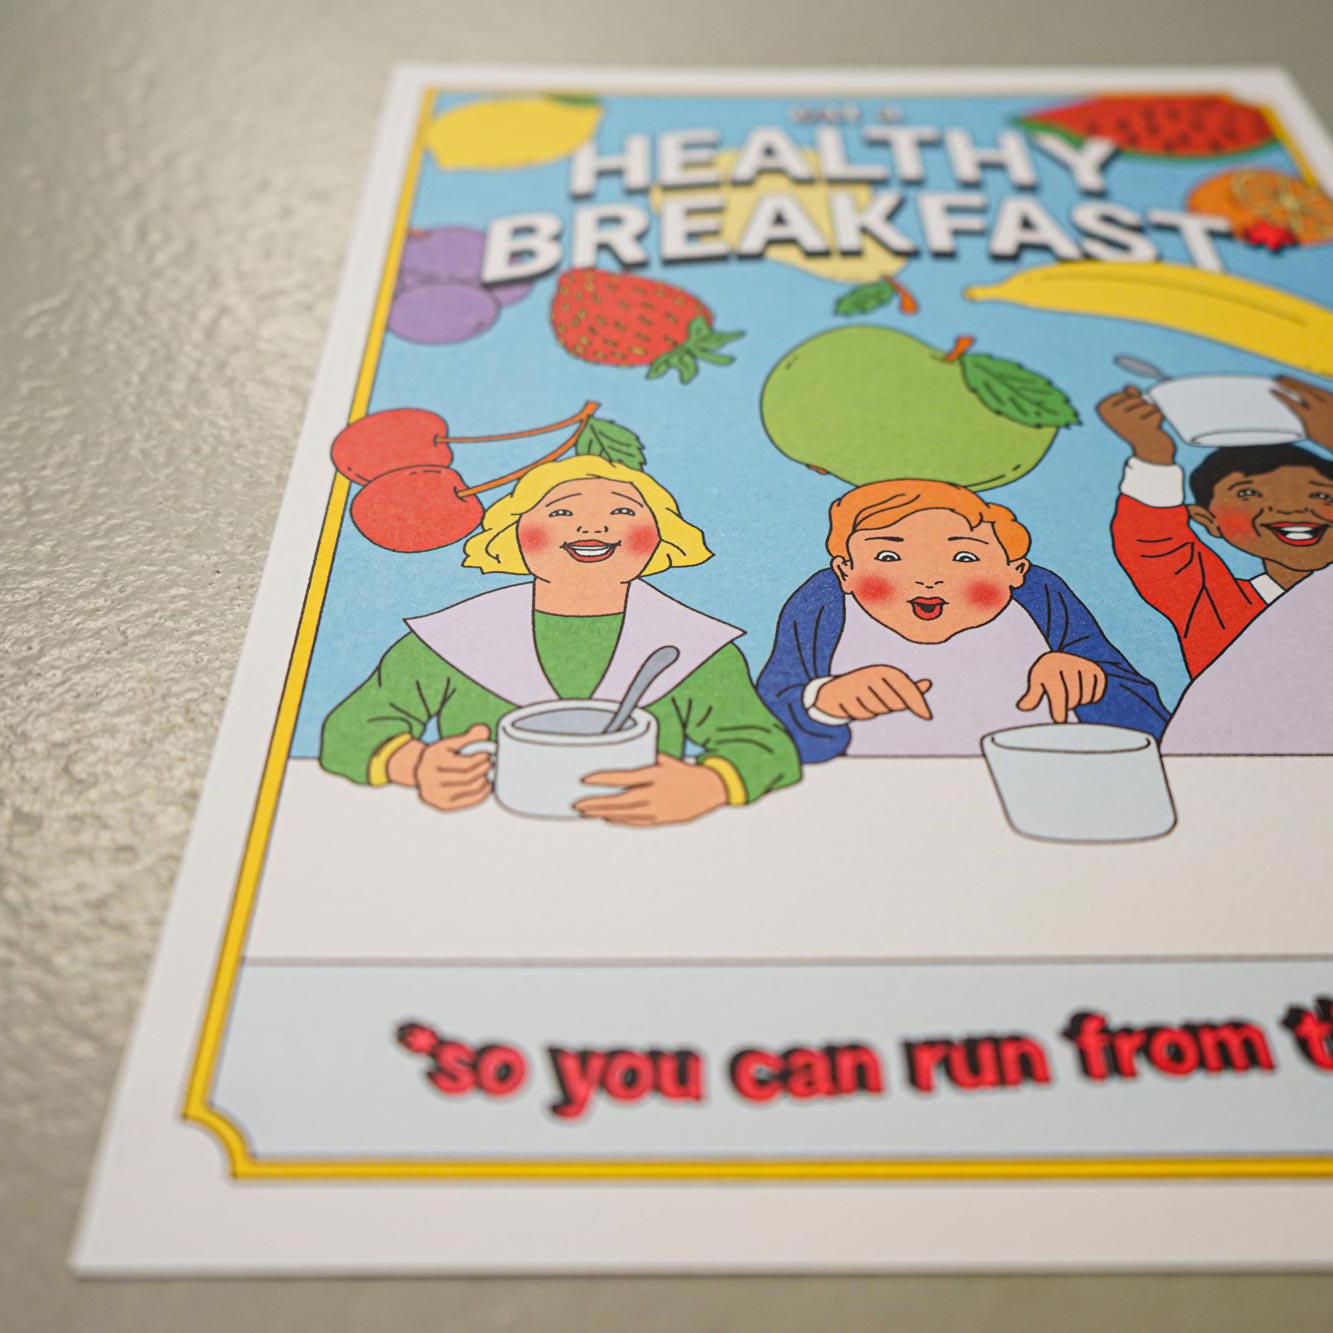 „Healthy Breakfast“ – A4 Offsetdruck